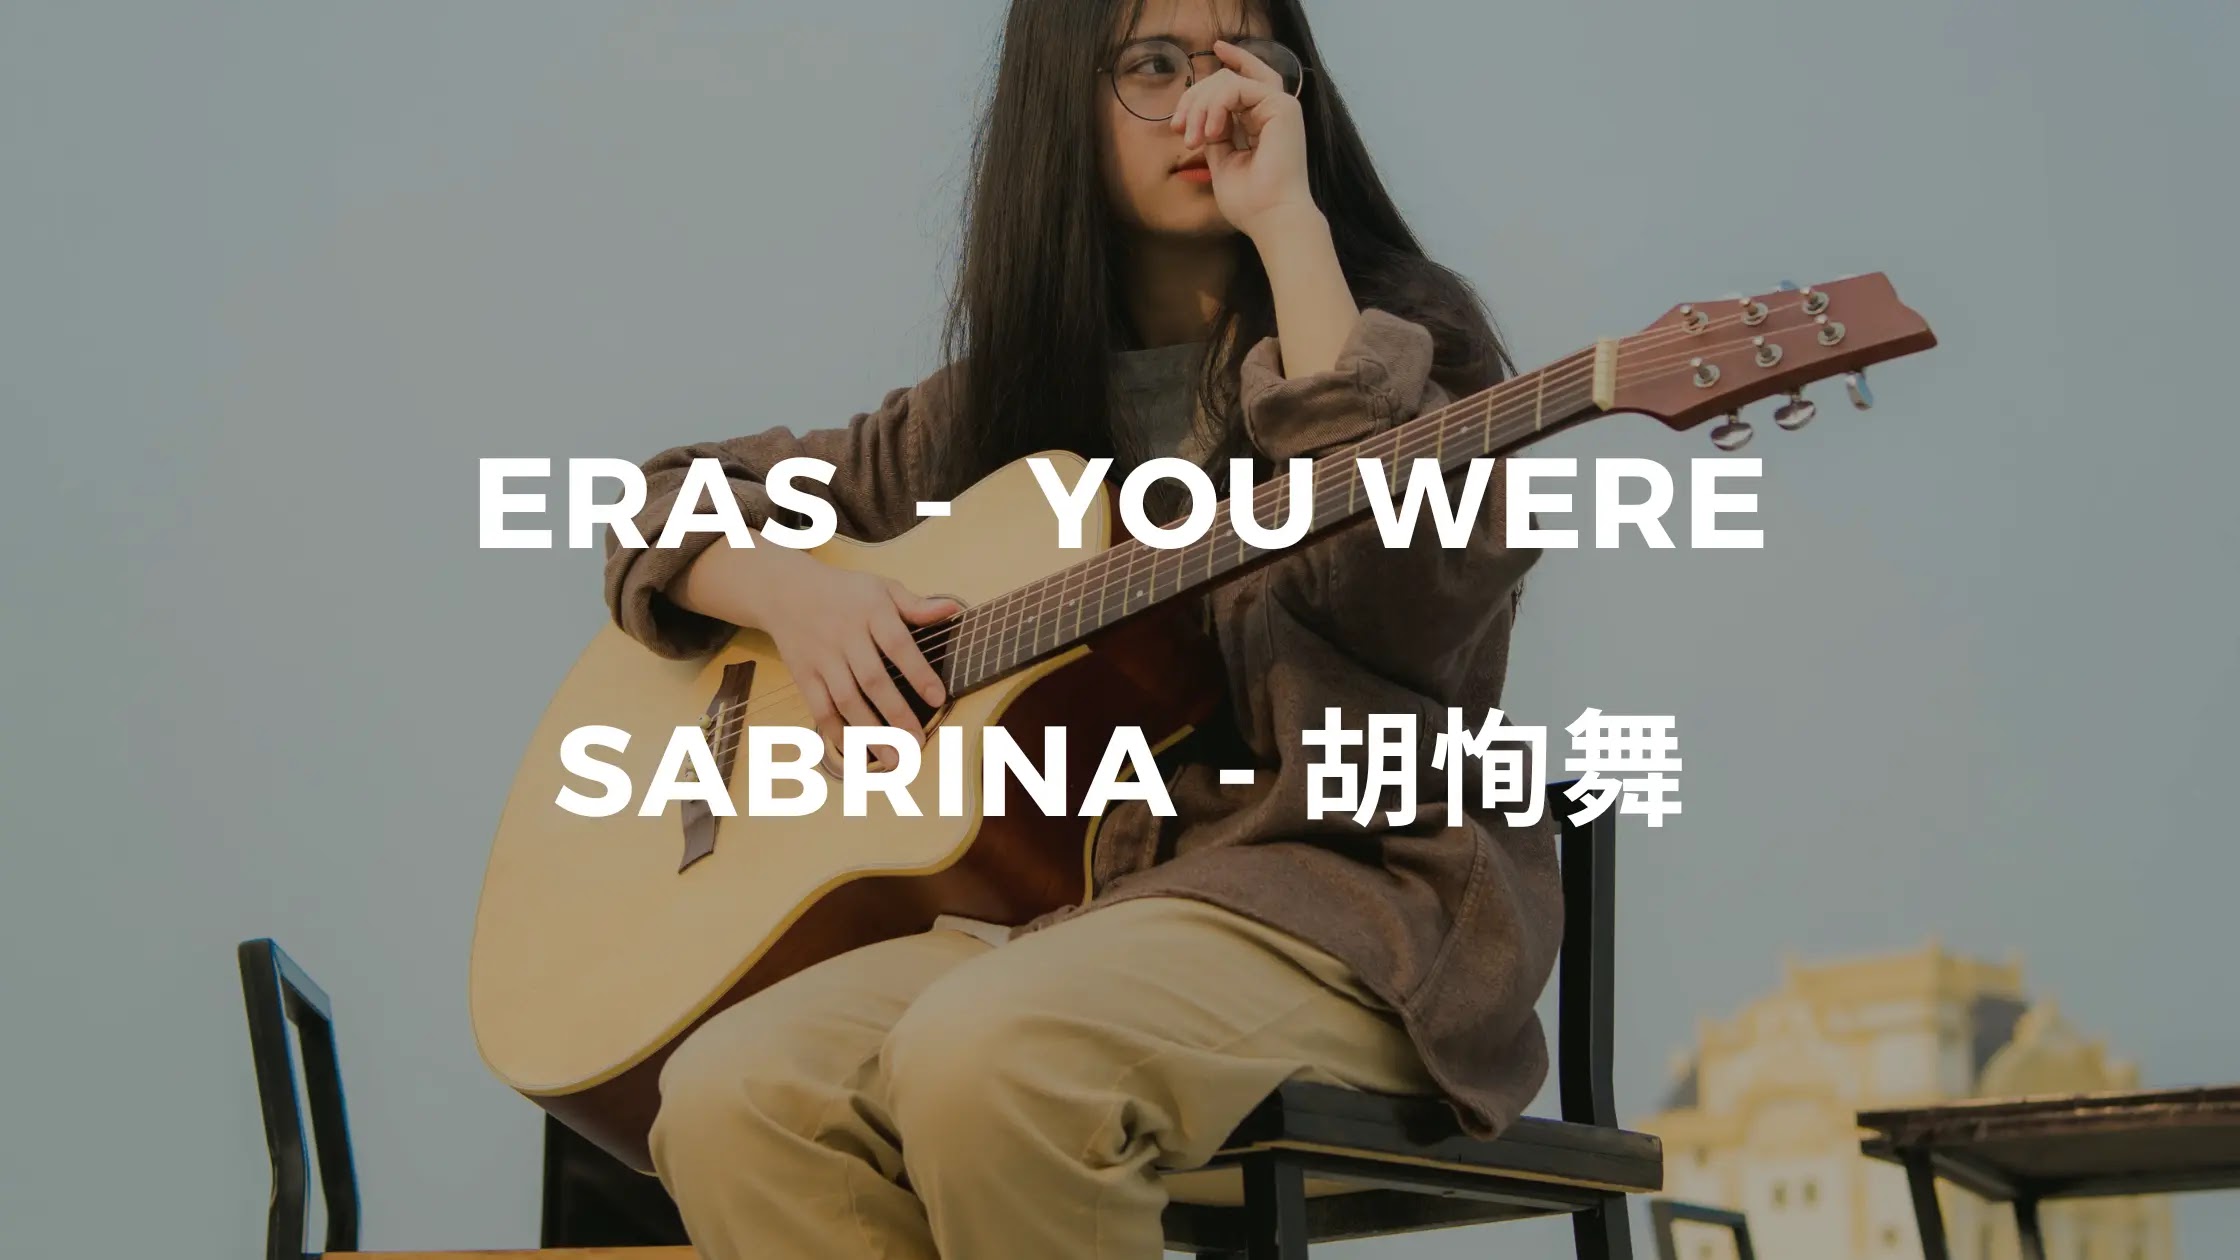 Aprende cantando chino: Sabrina - Tú eras [ES/CH/Pinyin]